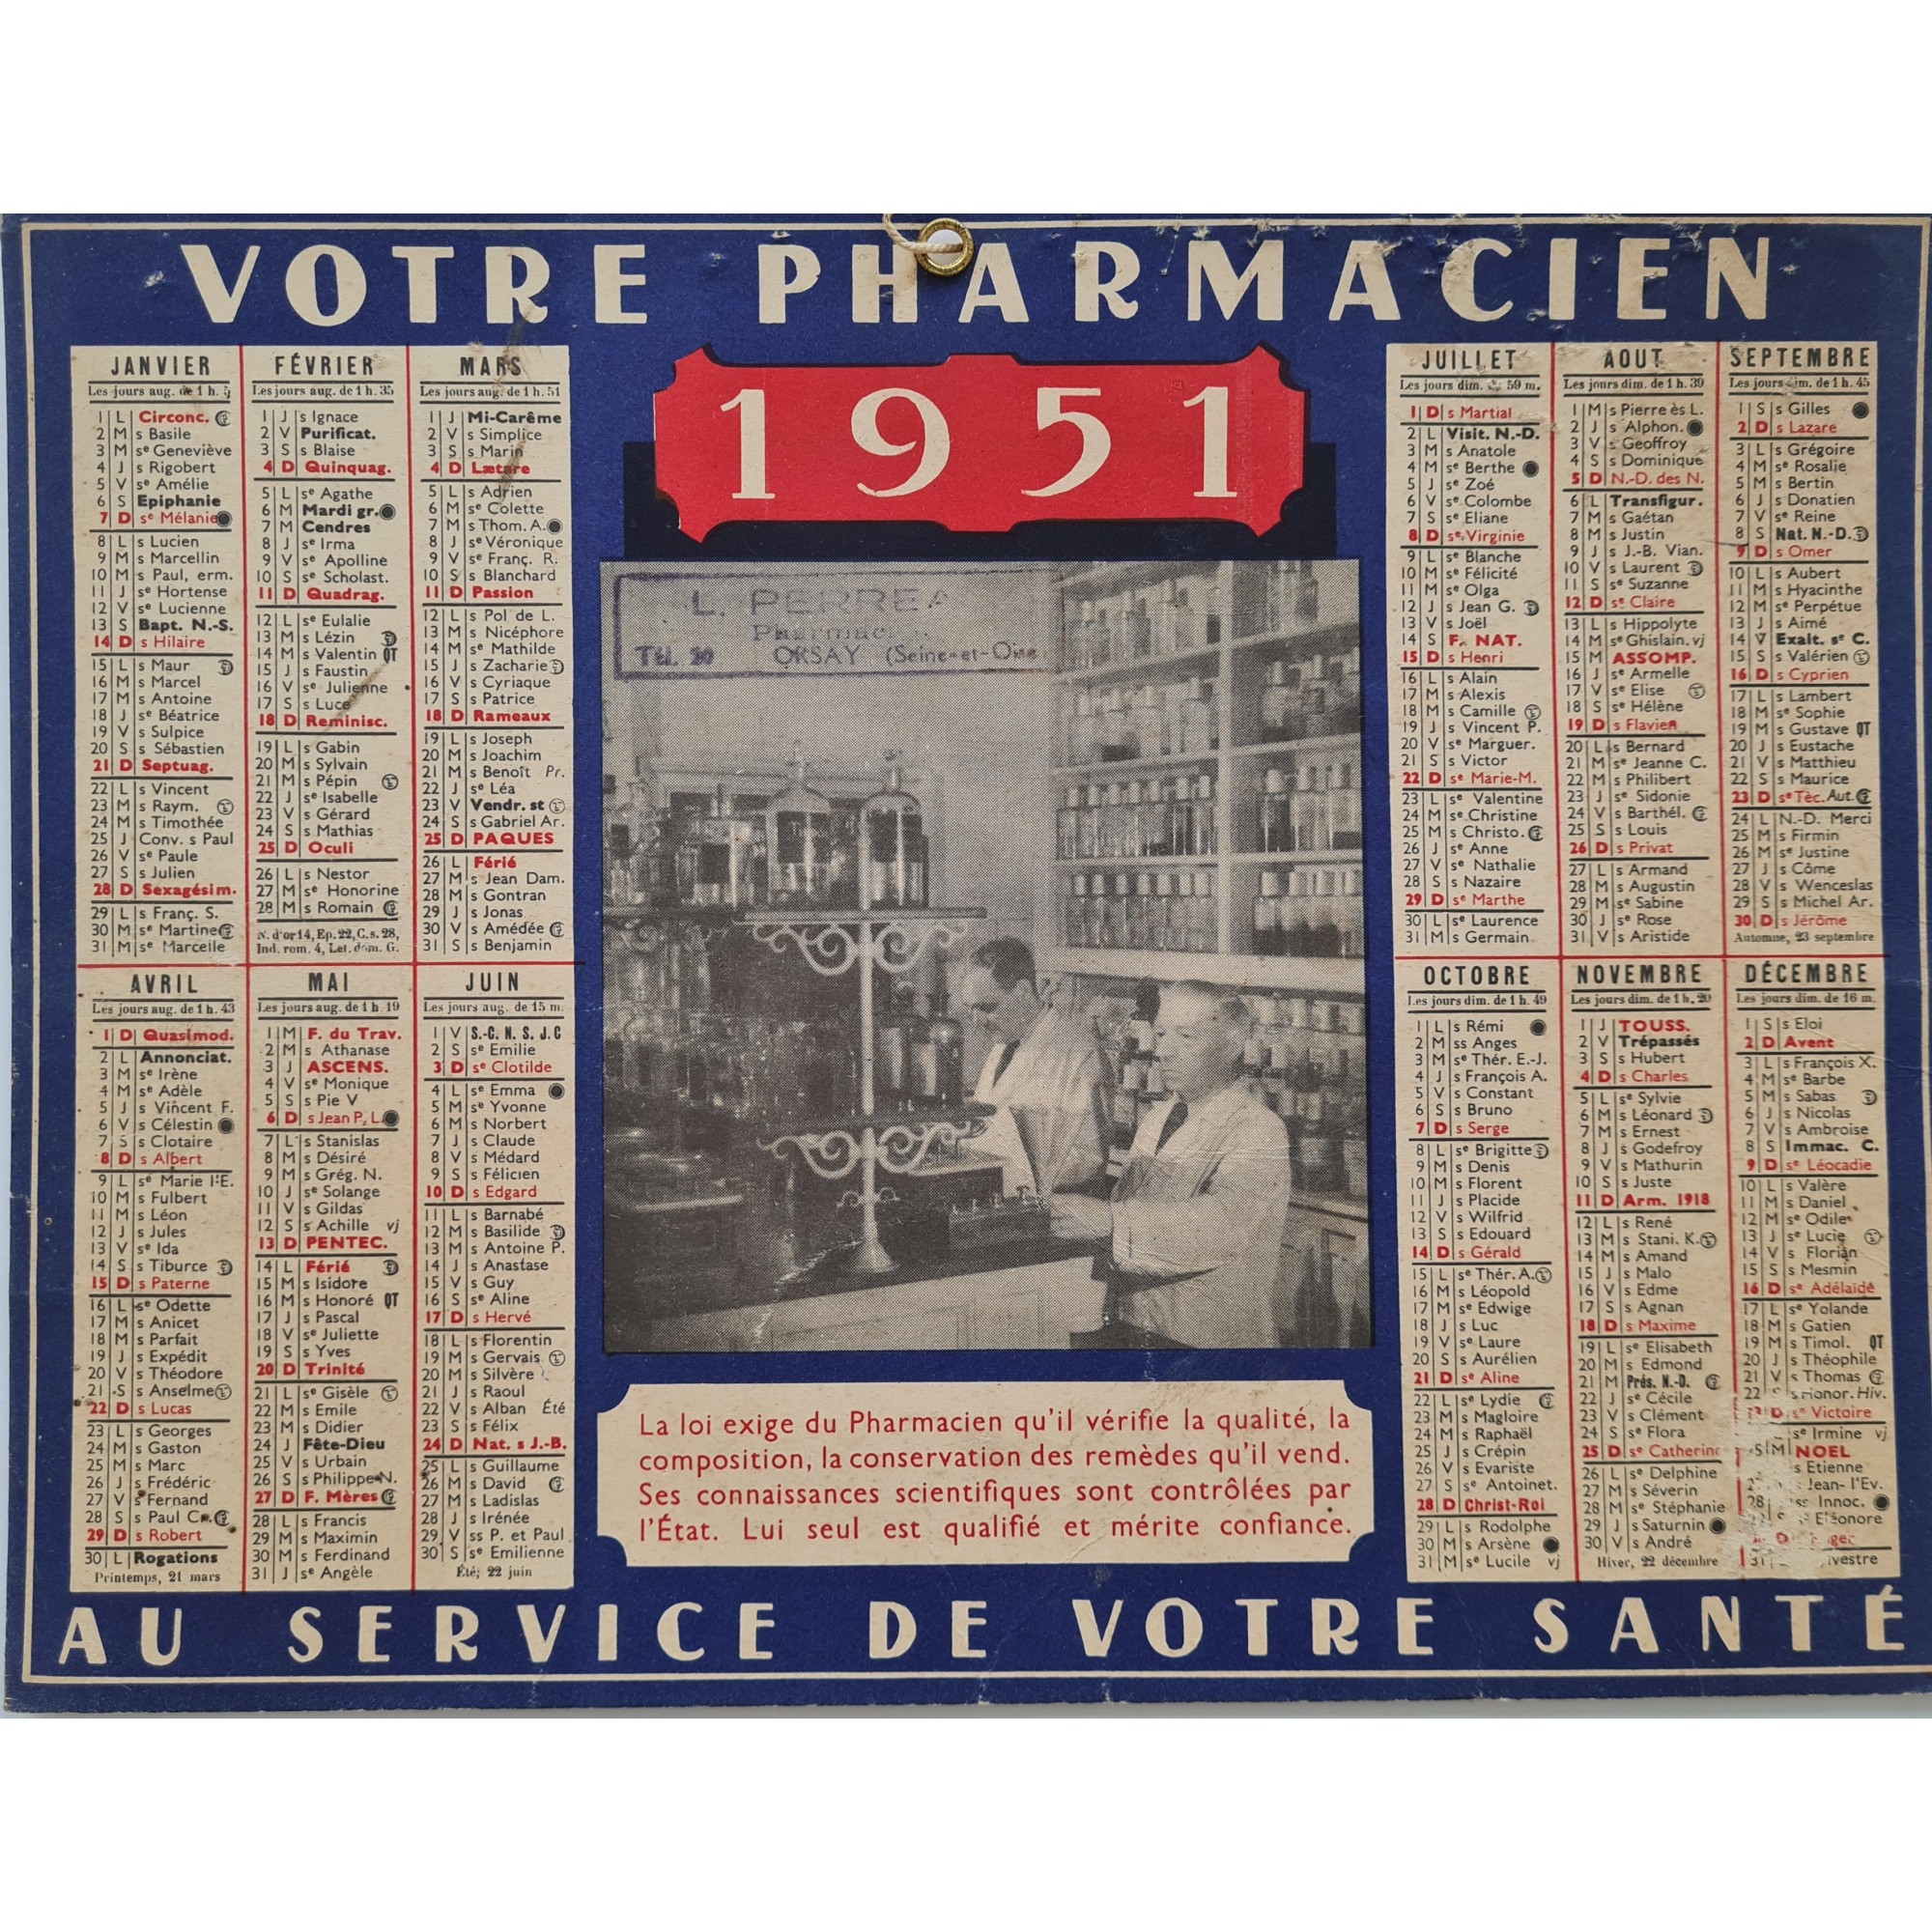 1951 - Votre Pharmacien